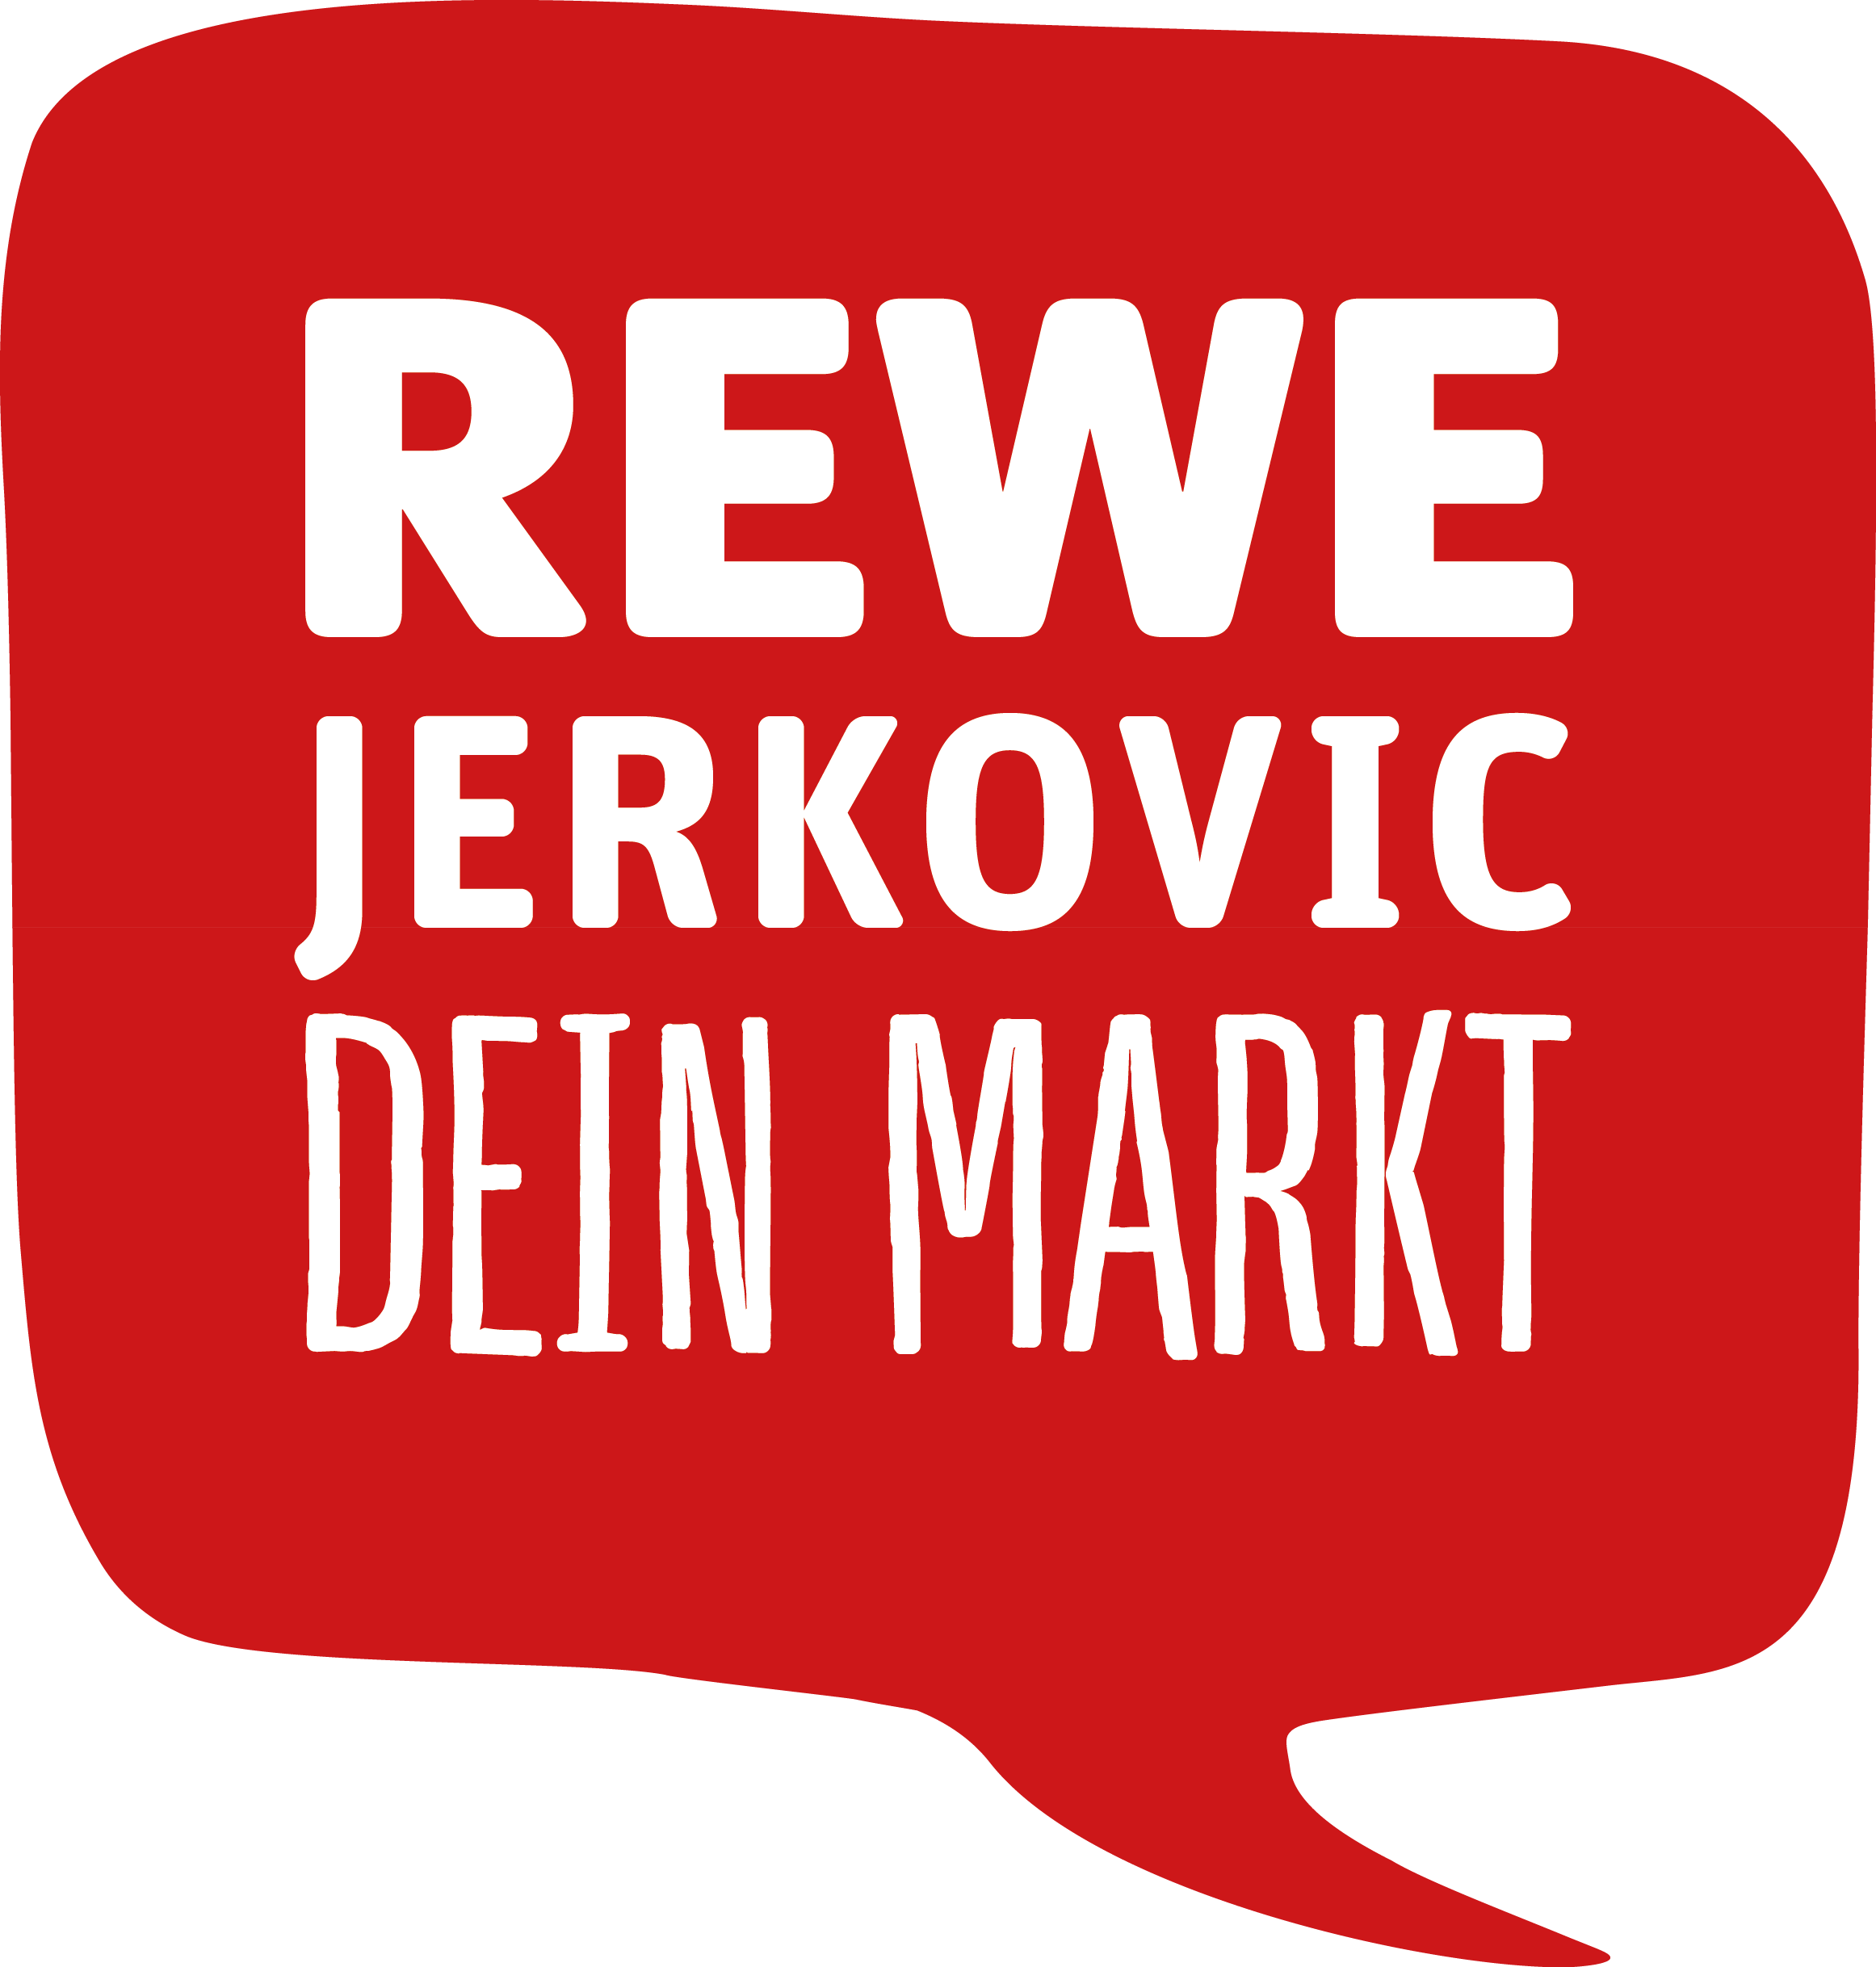 REWE Jerkovic